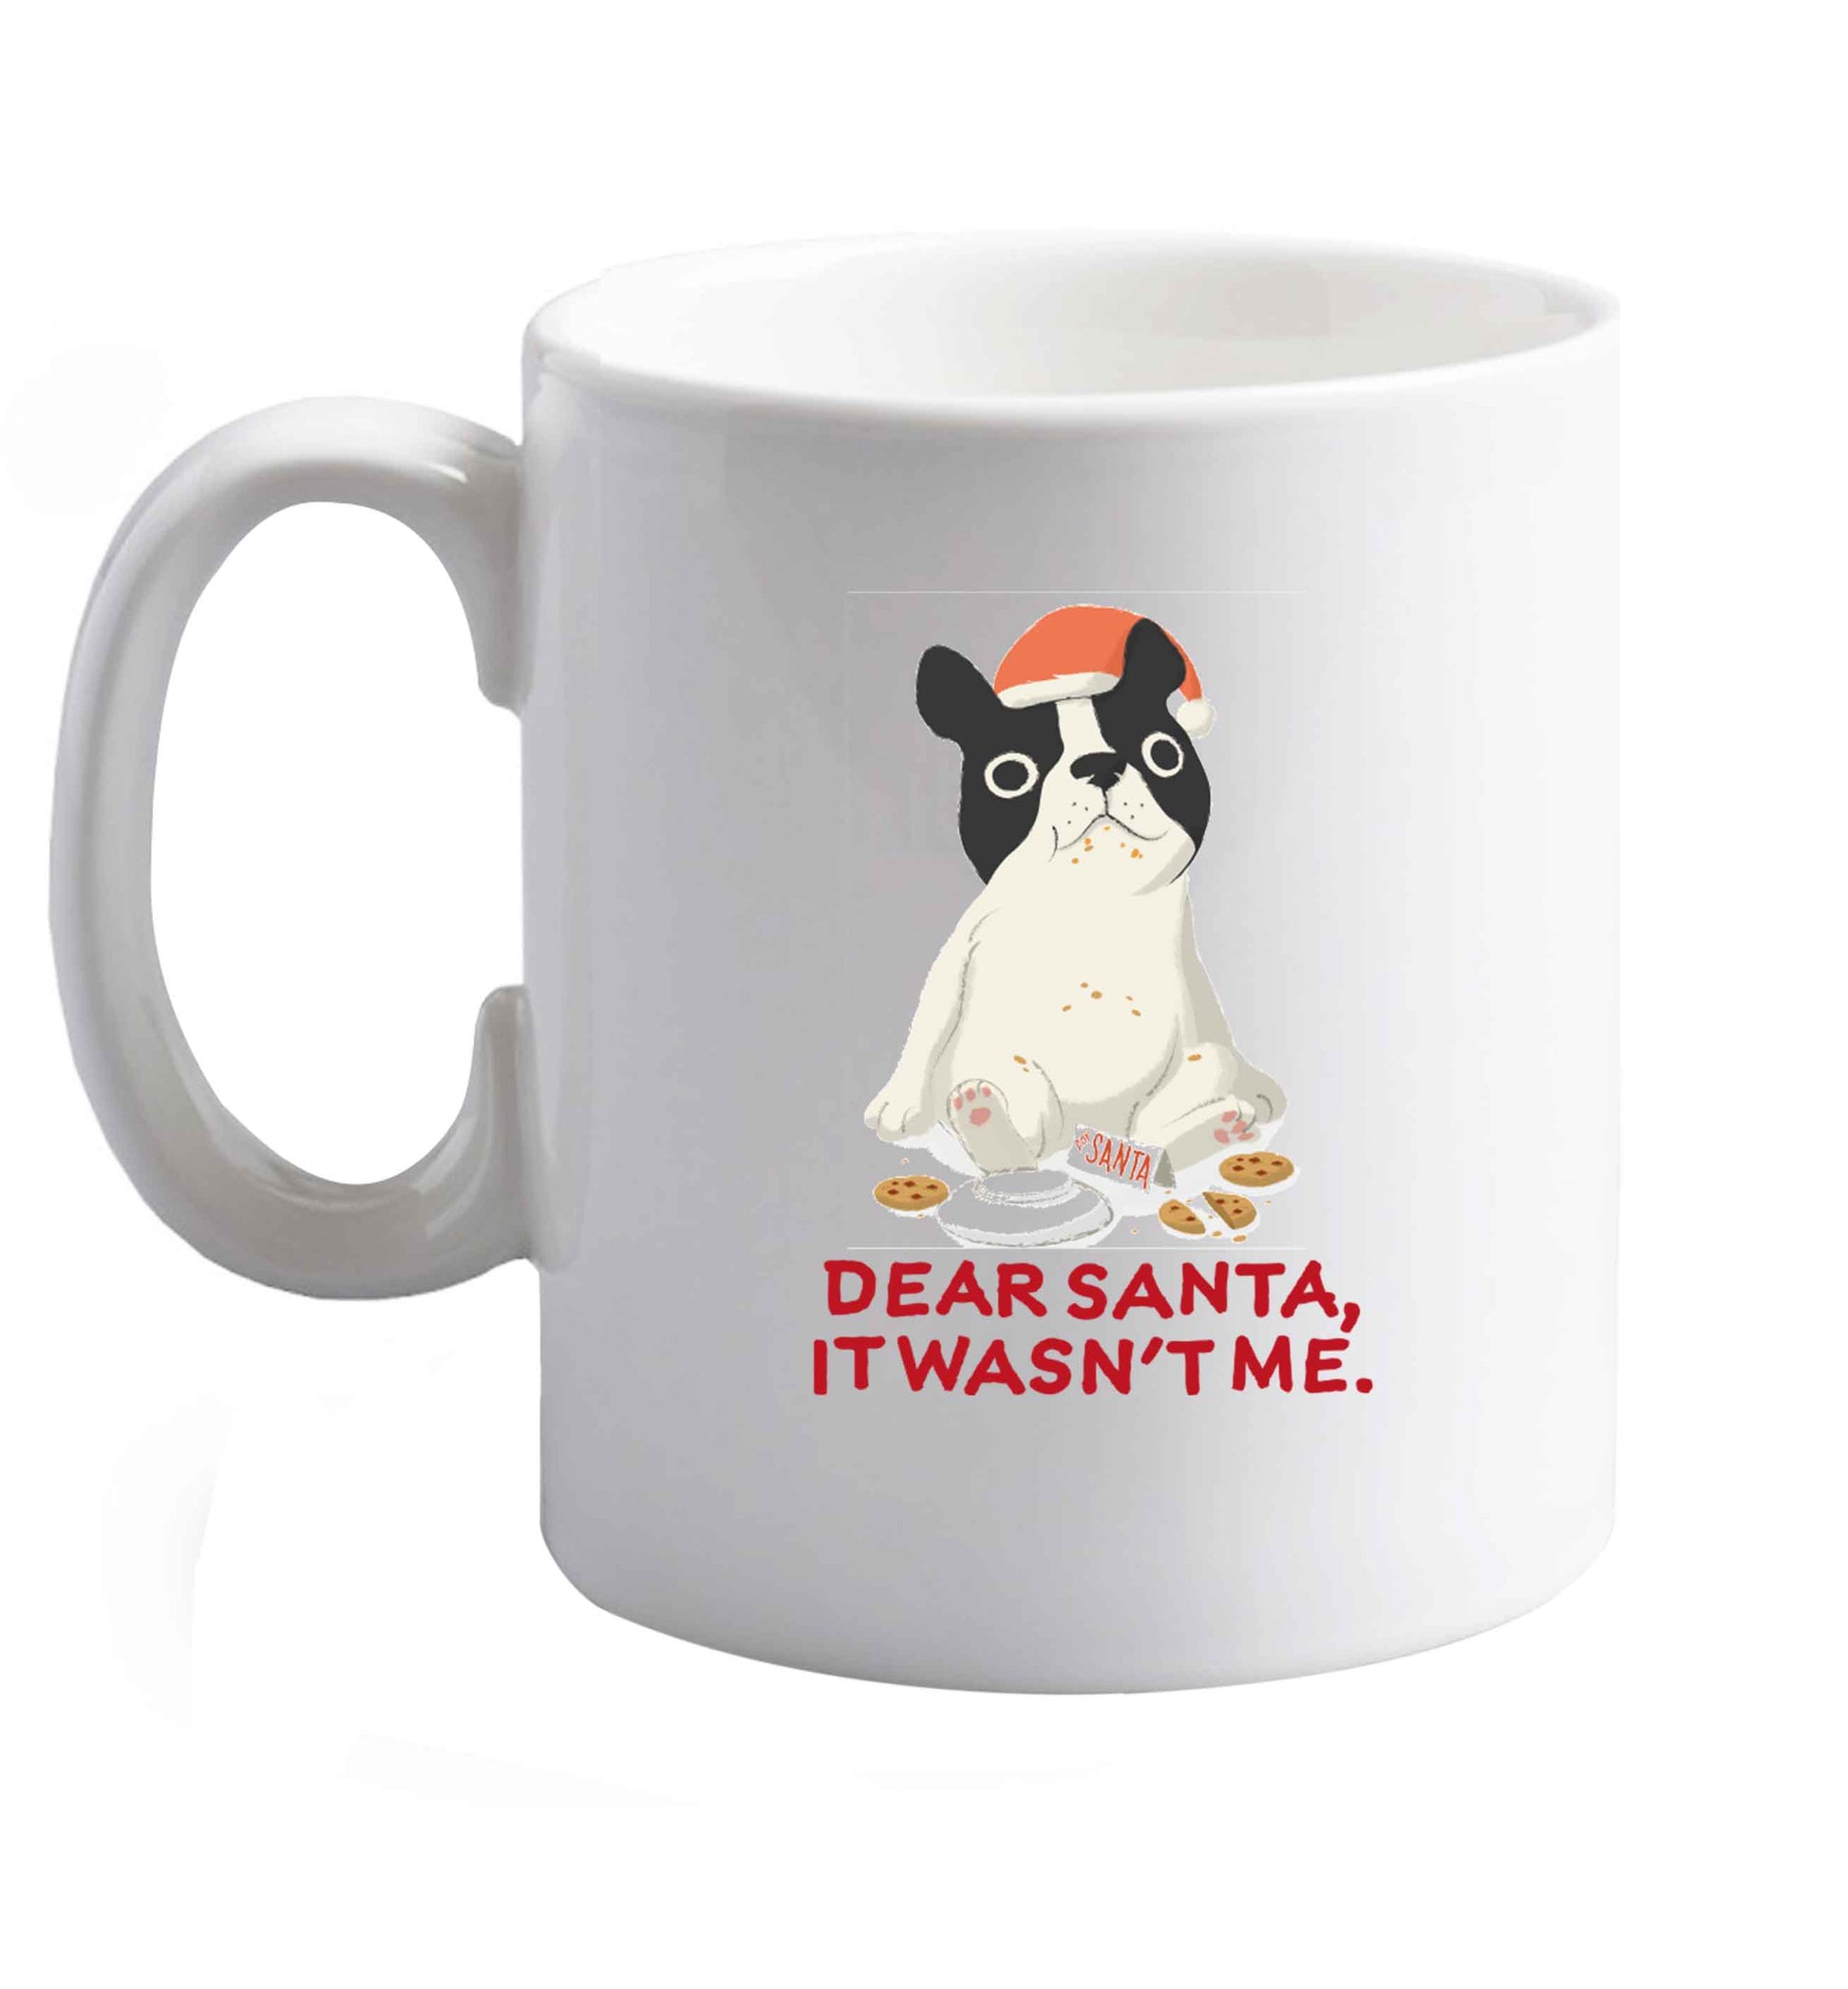 10 oz Dear Santa it wasn't me ceramic mug right handed